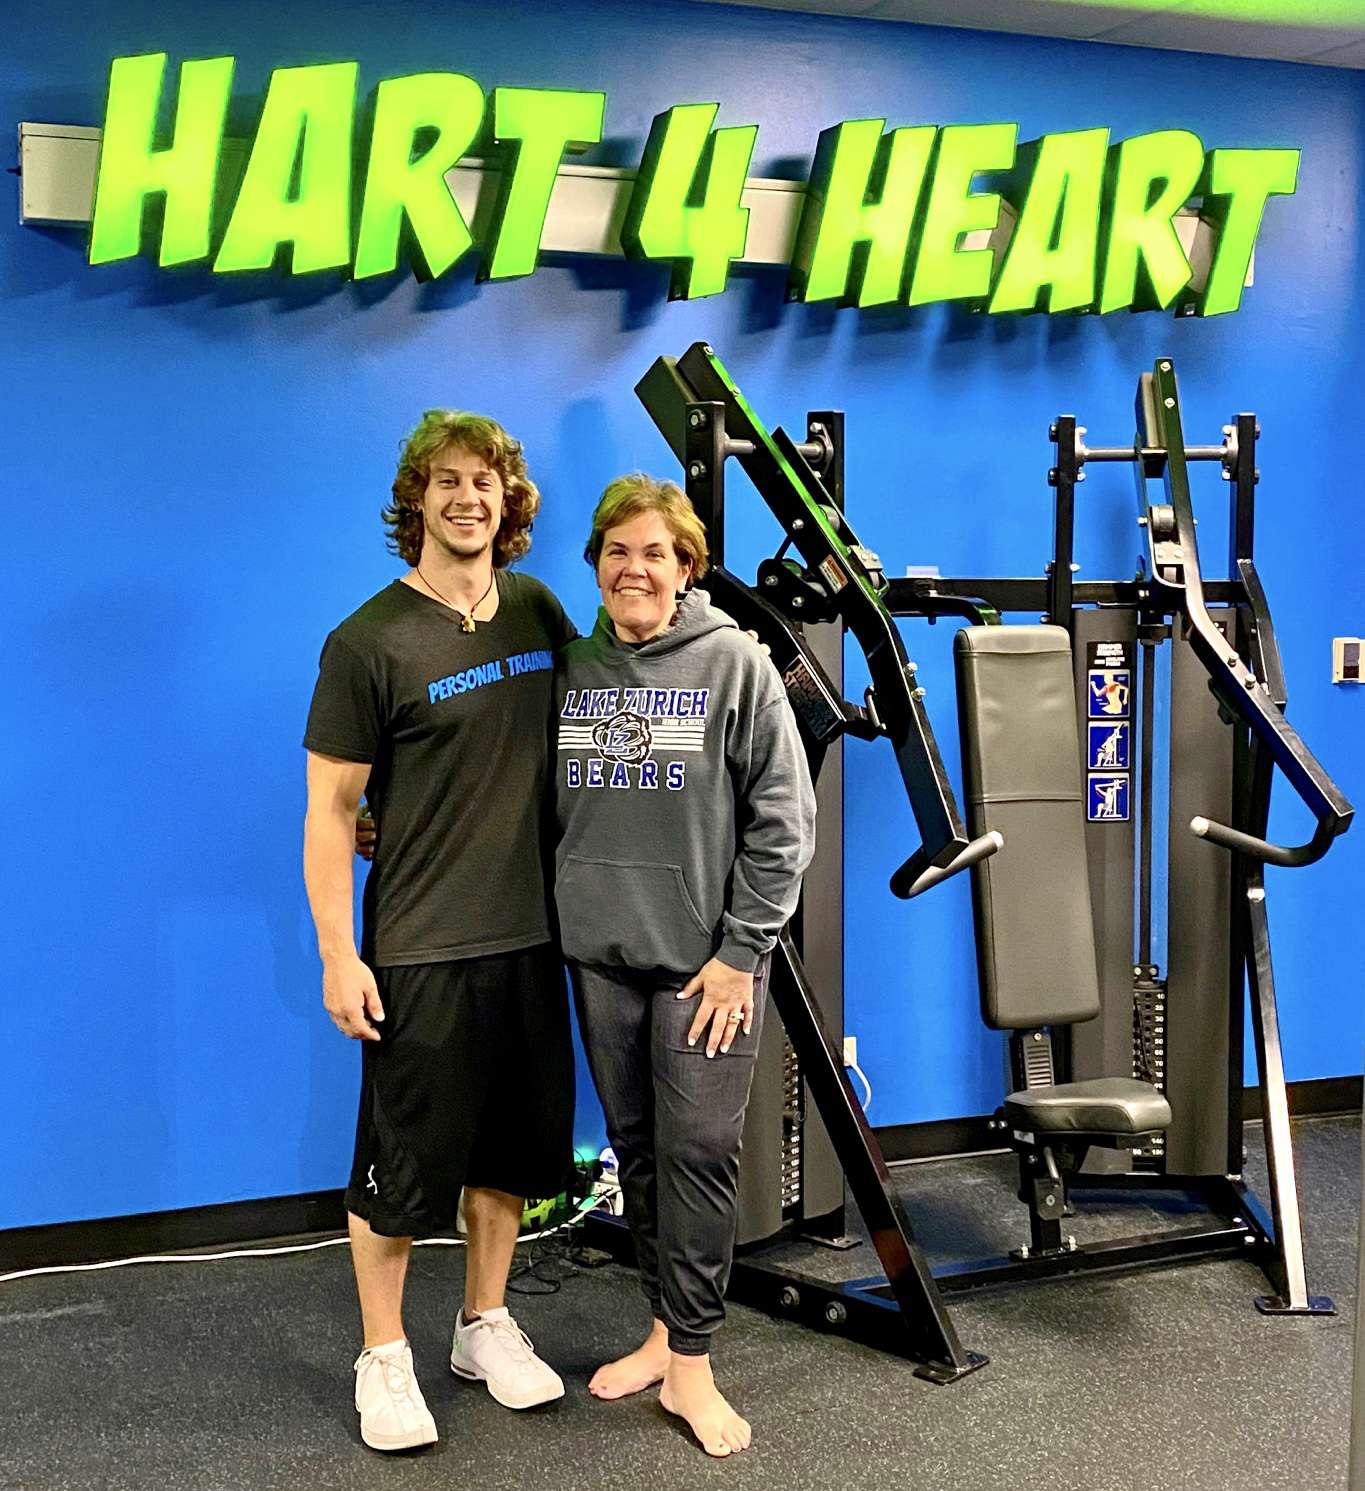 Hart 4 Heart | Personal Fitness Training